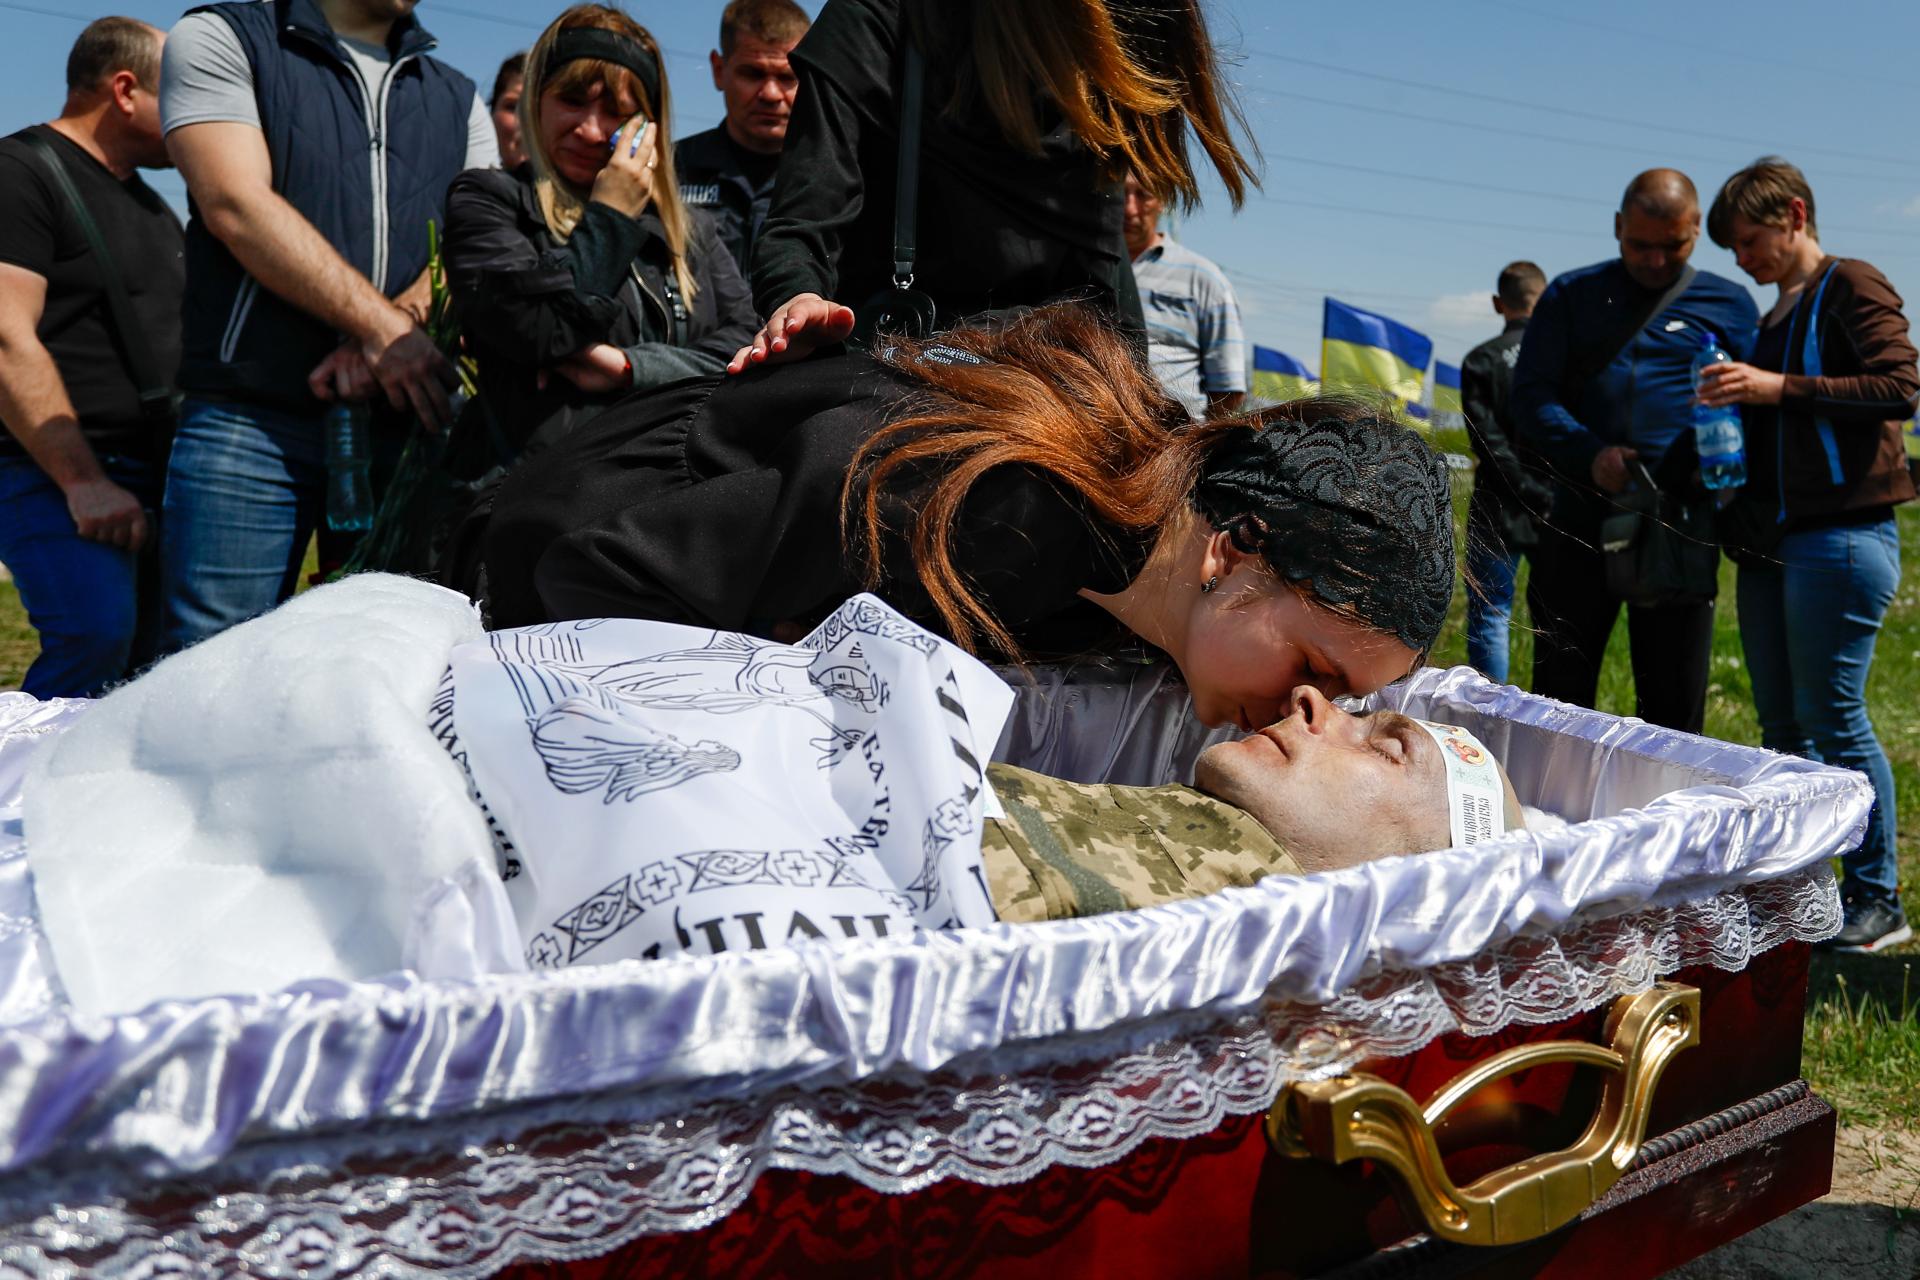 European Photography Awards Winner - Ukraine:The terror of war